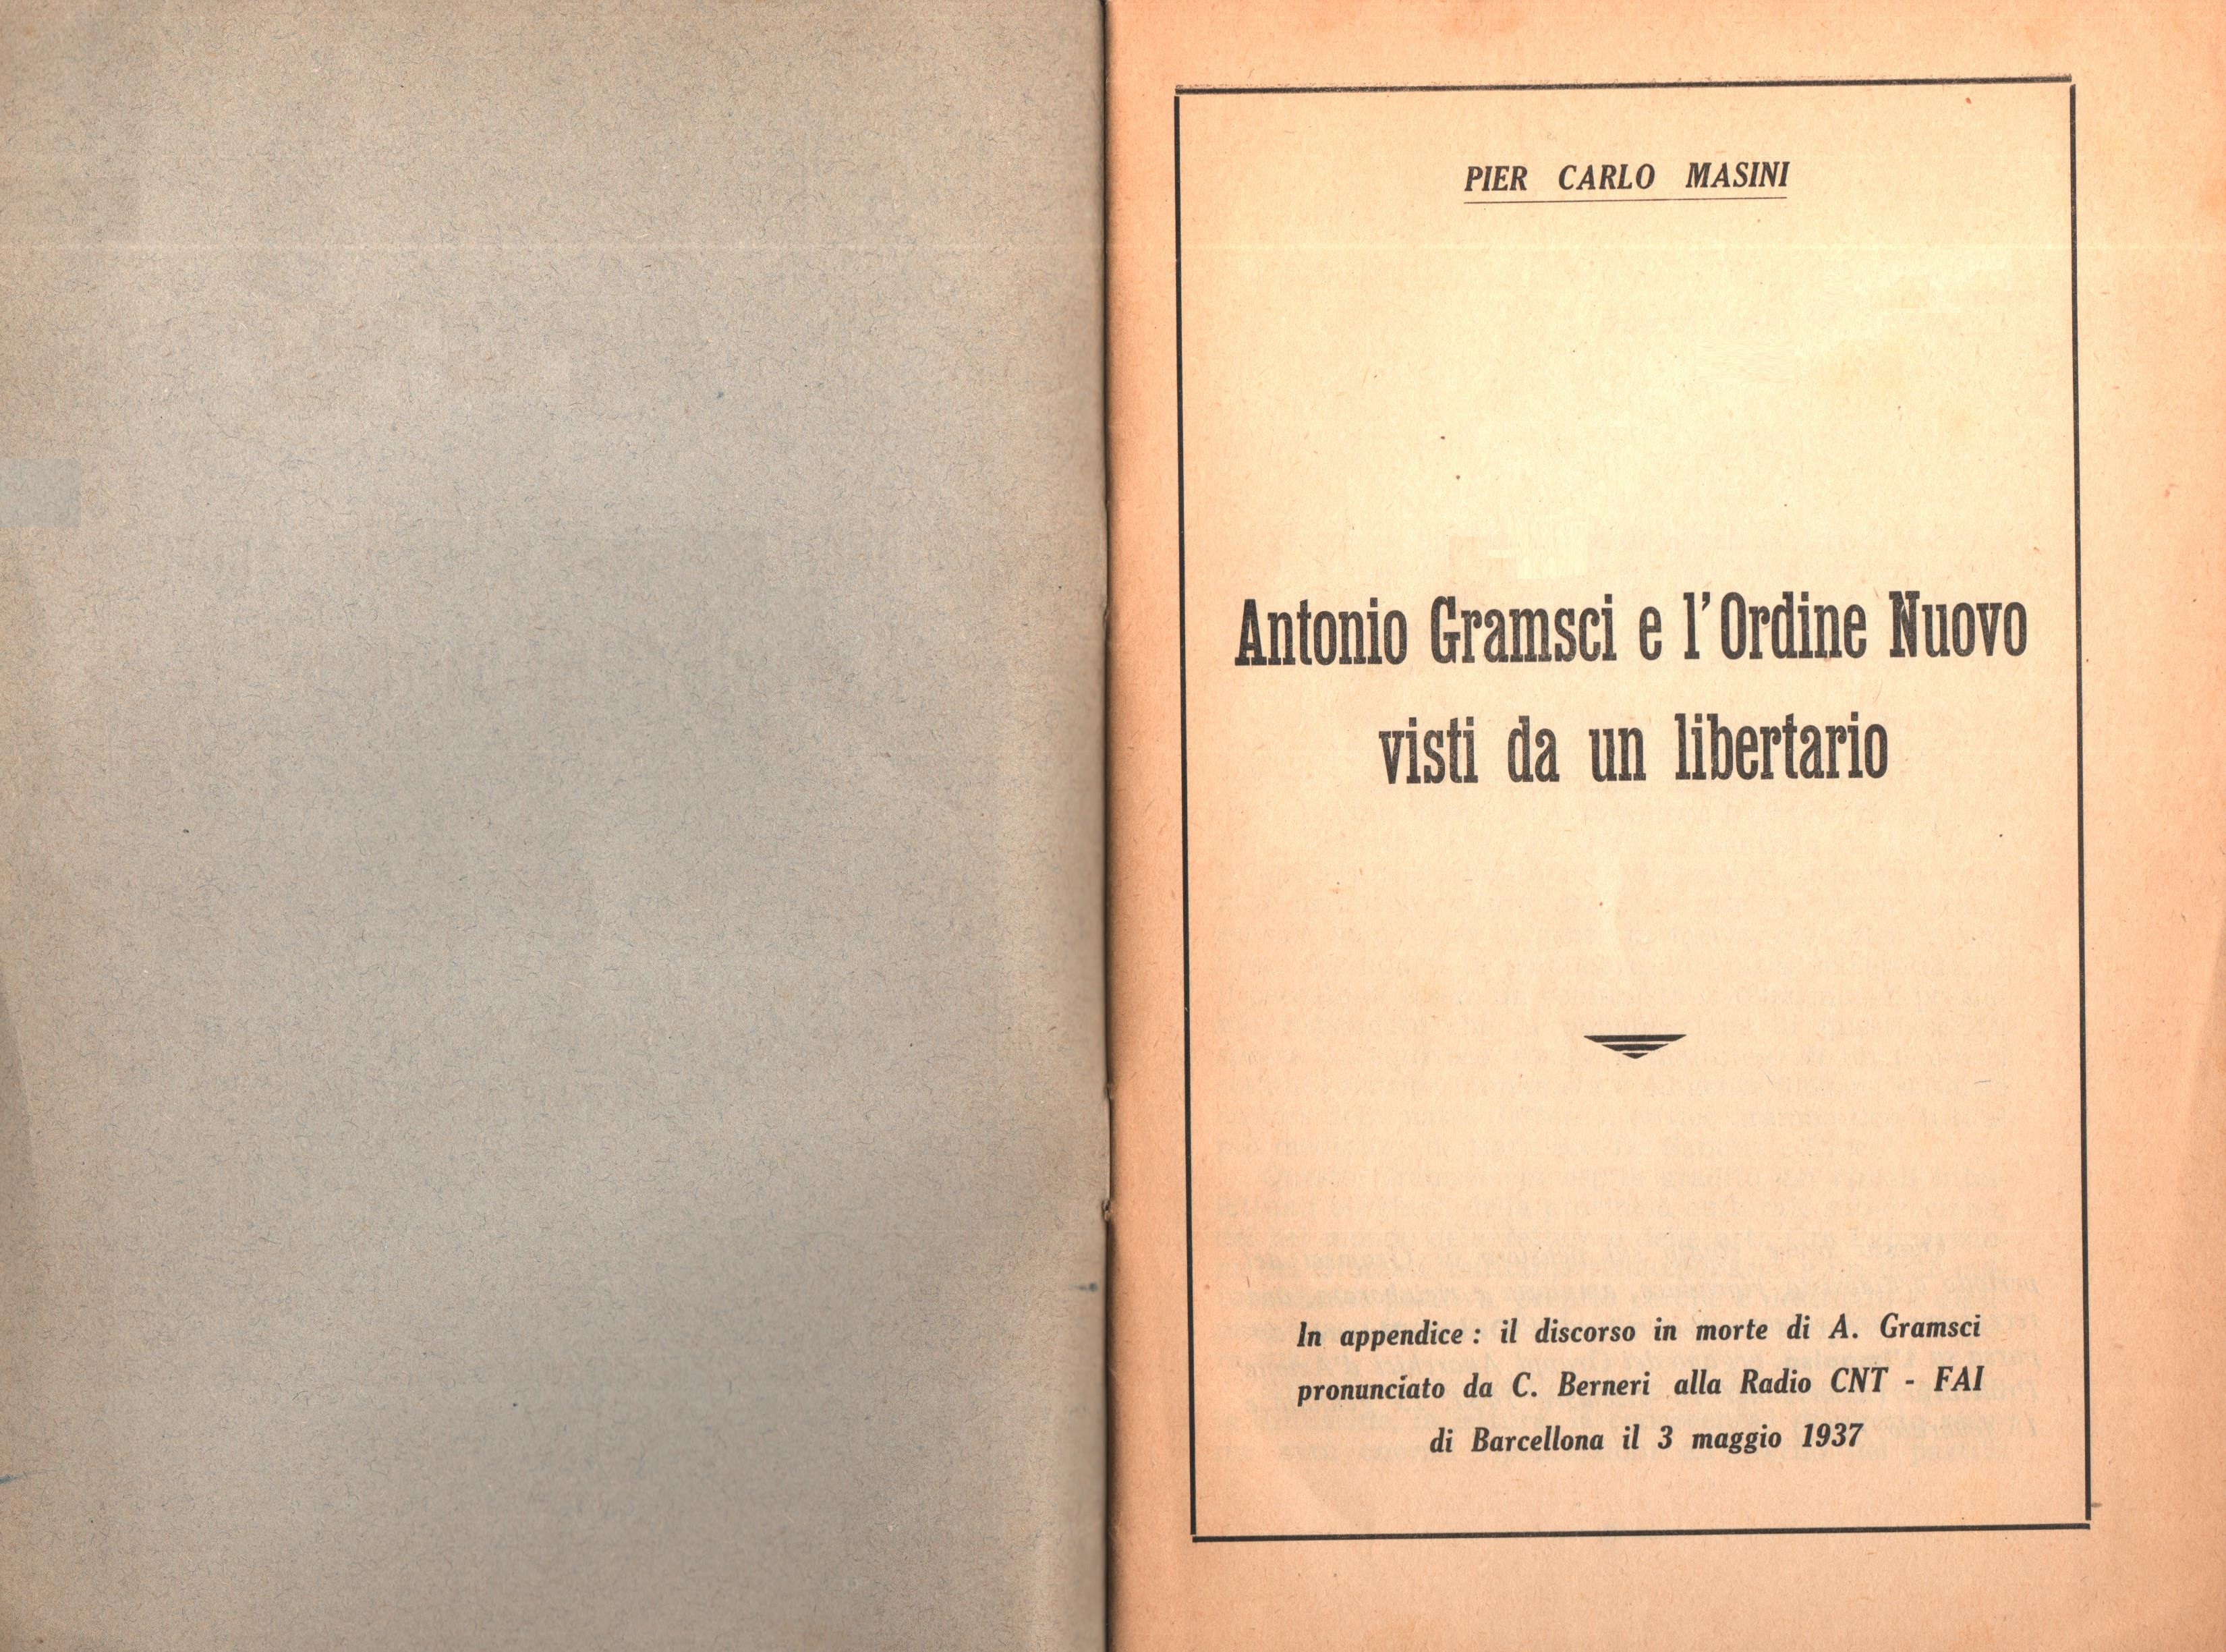 Pier Carlo Masini, Antonio Gramsci - pag. 2